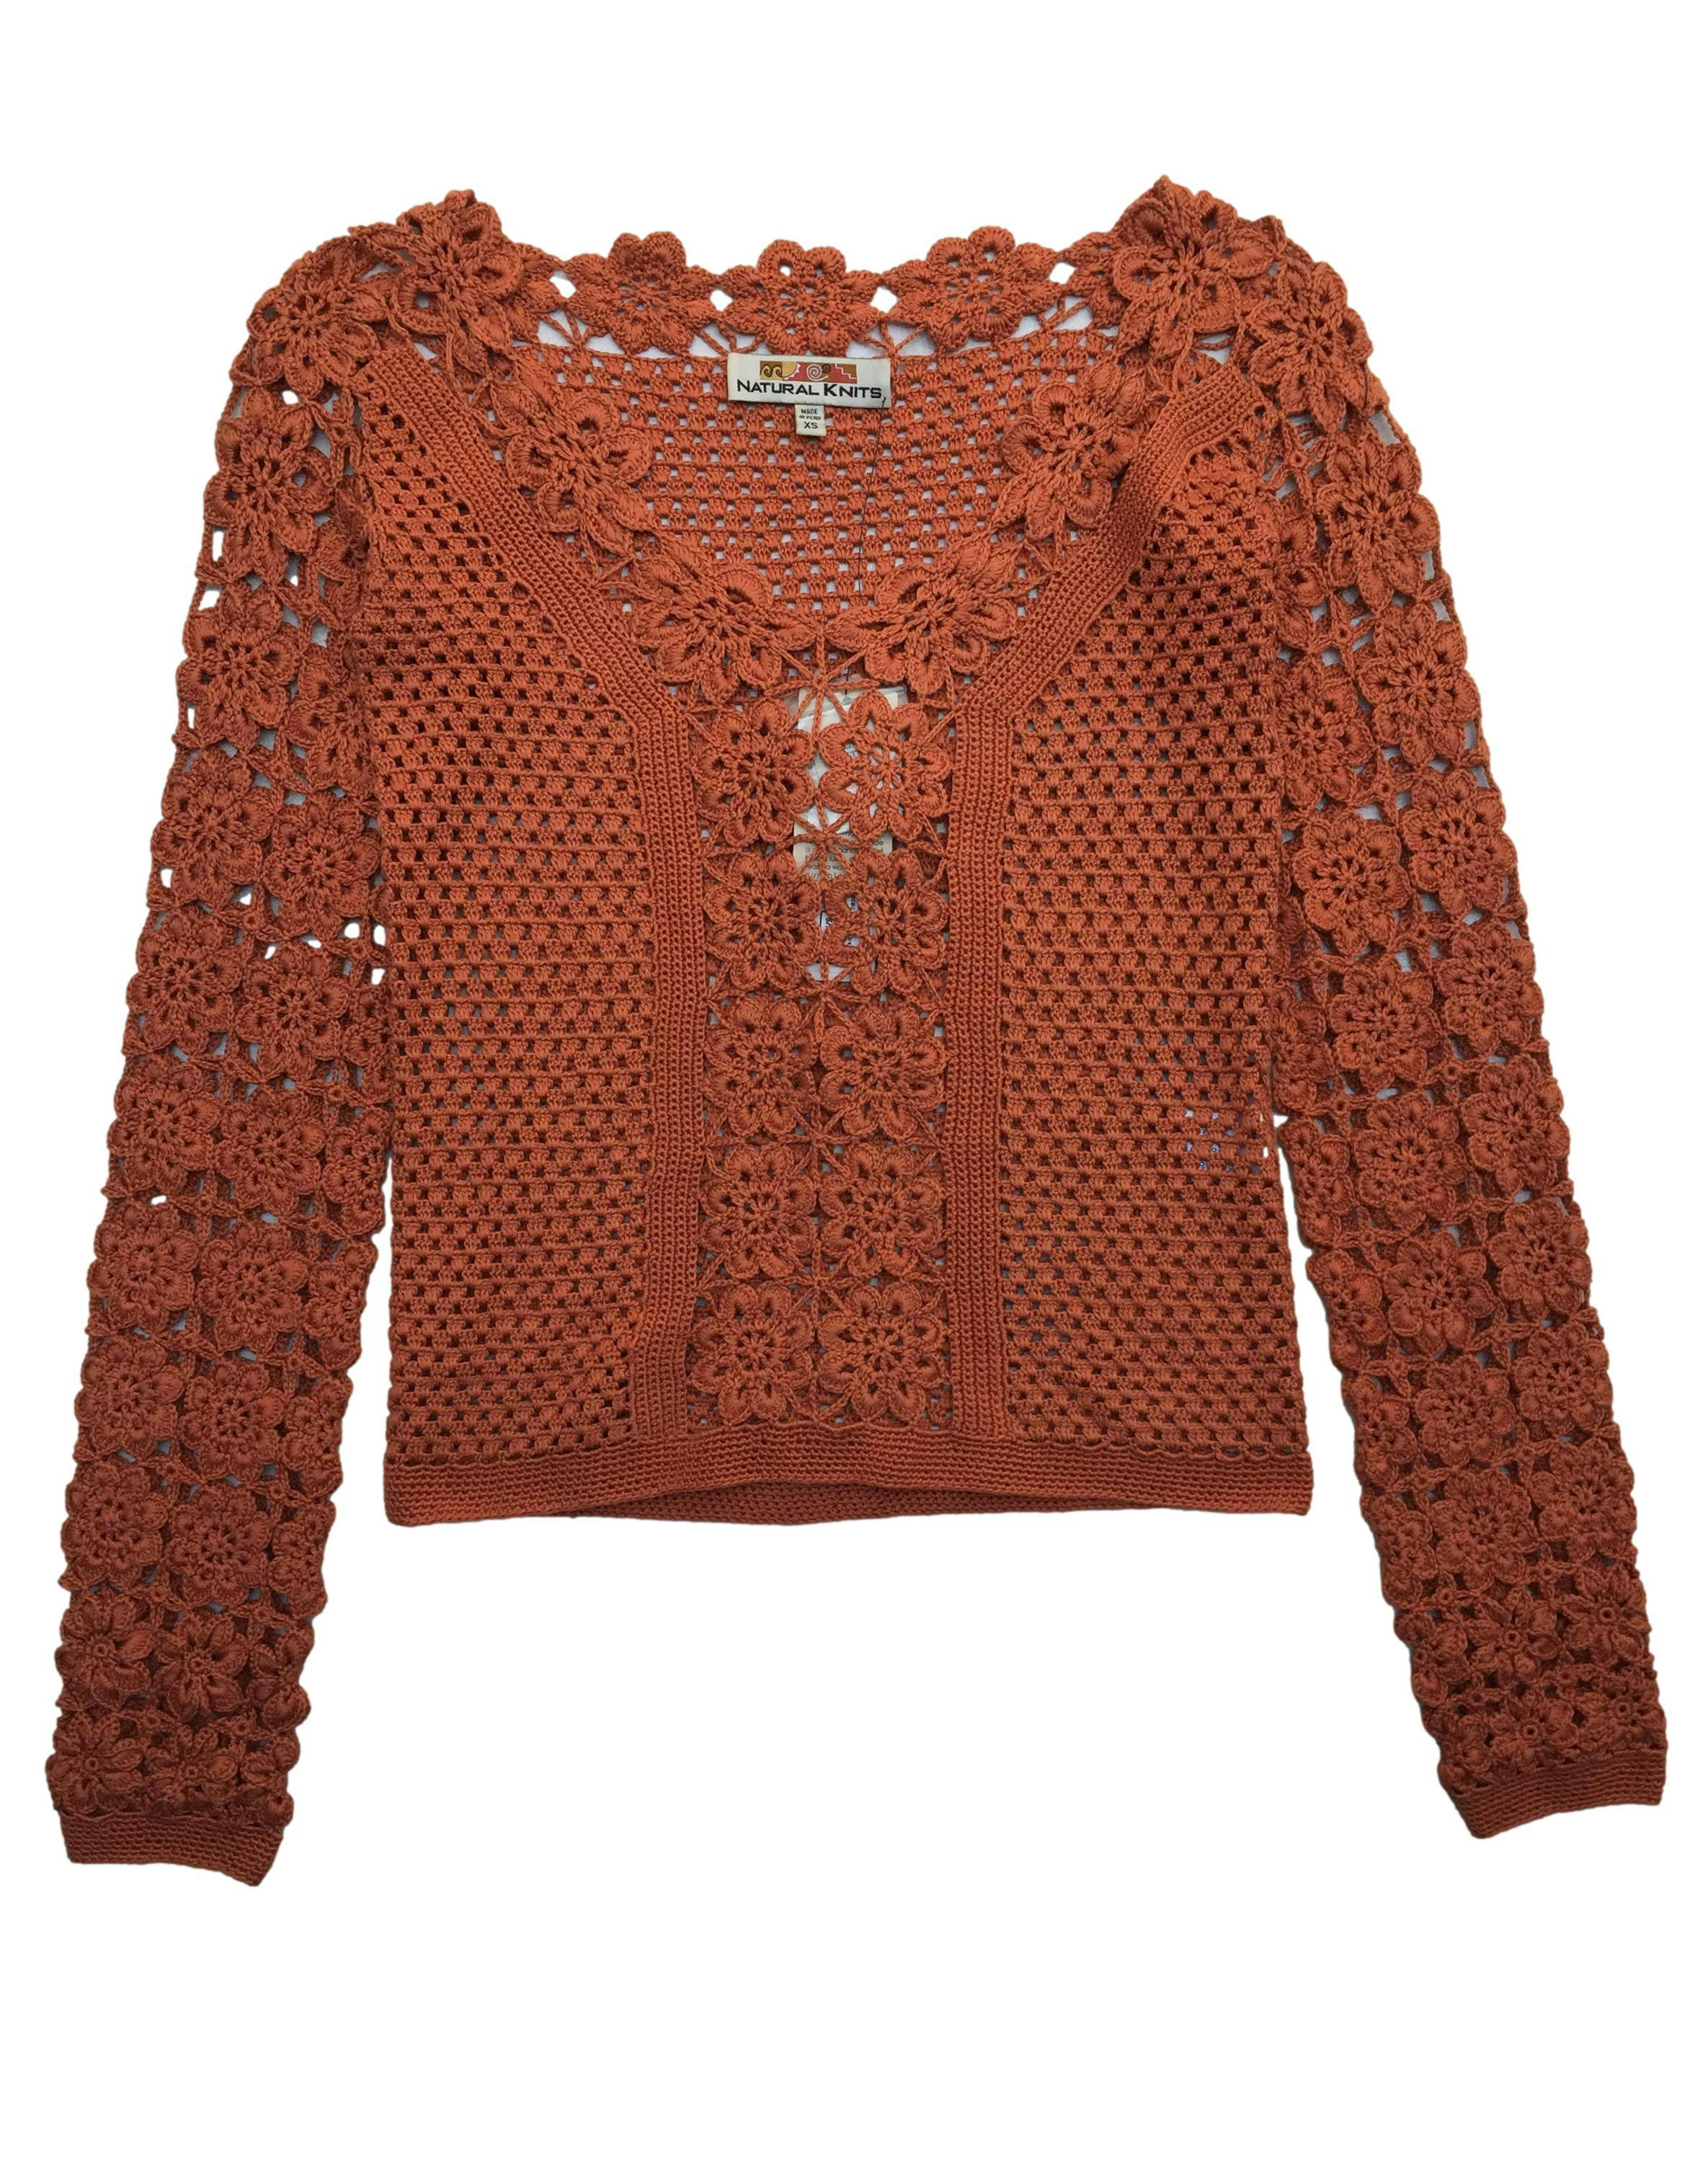 Chompa tejido crochet Natural Knits anaranjado, 100% algodón pima. Busto 85cm Largo 52cm . Nuevo con etiqueta. precio regular S/350